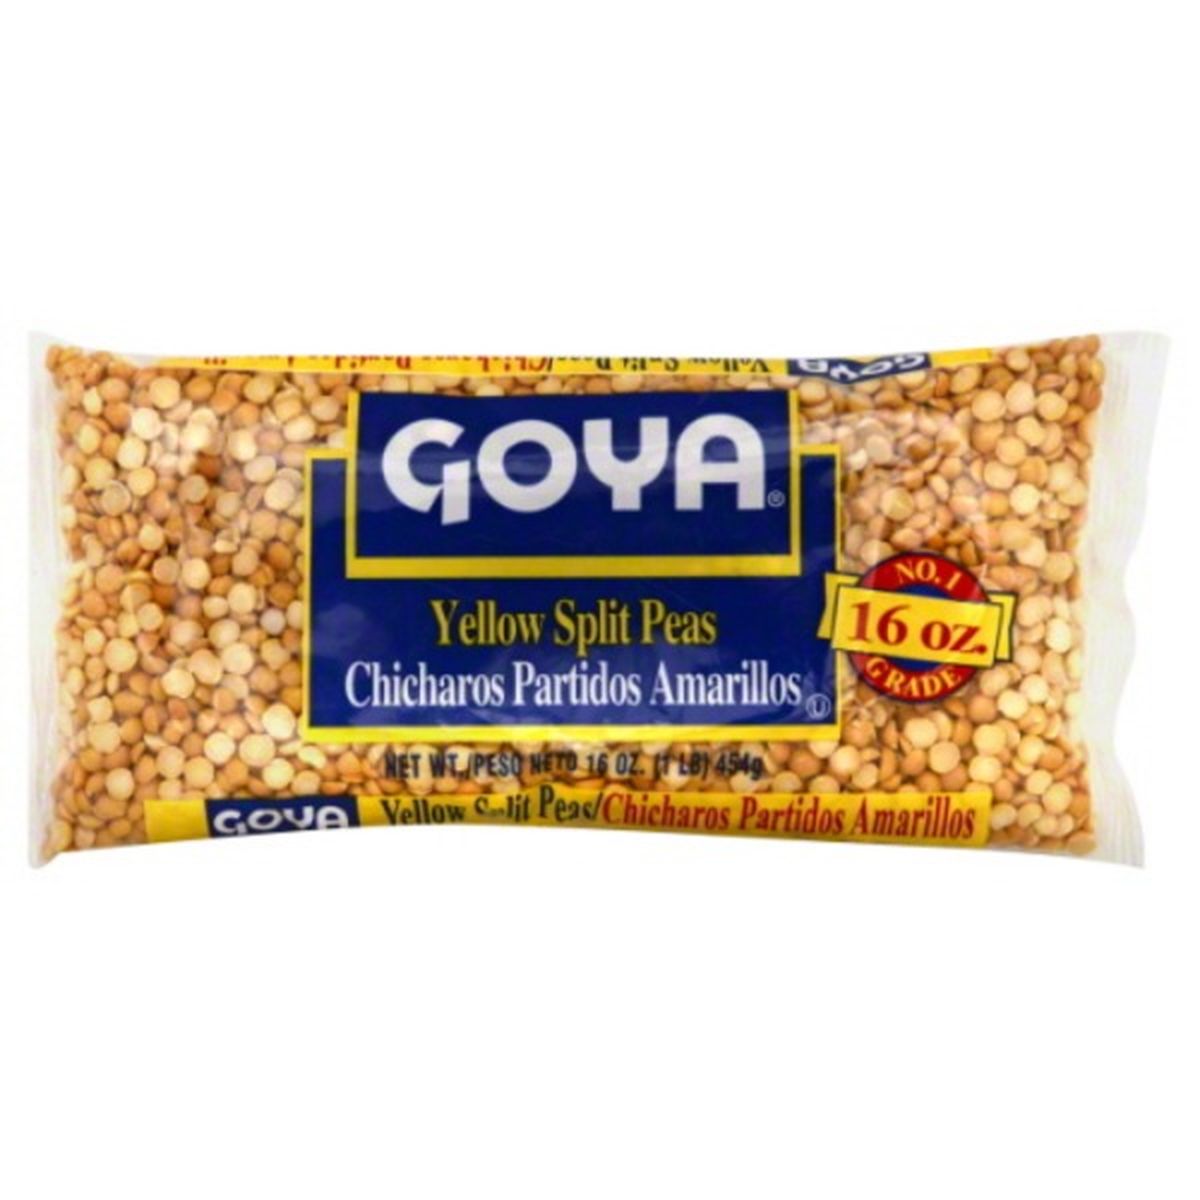 Calories in Goya Split Peas, Yellow